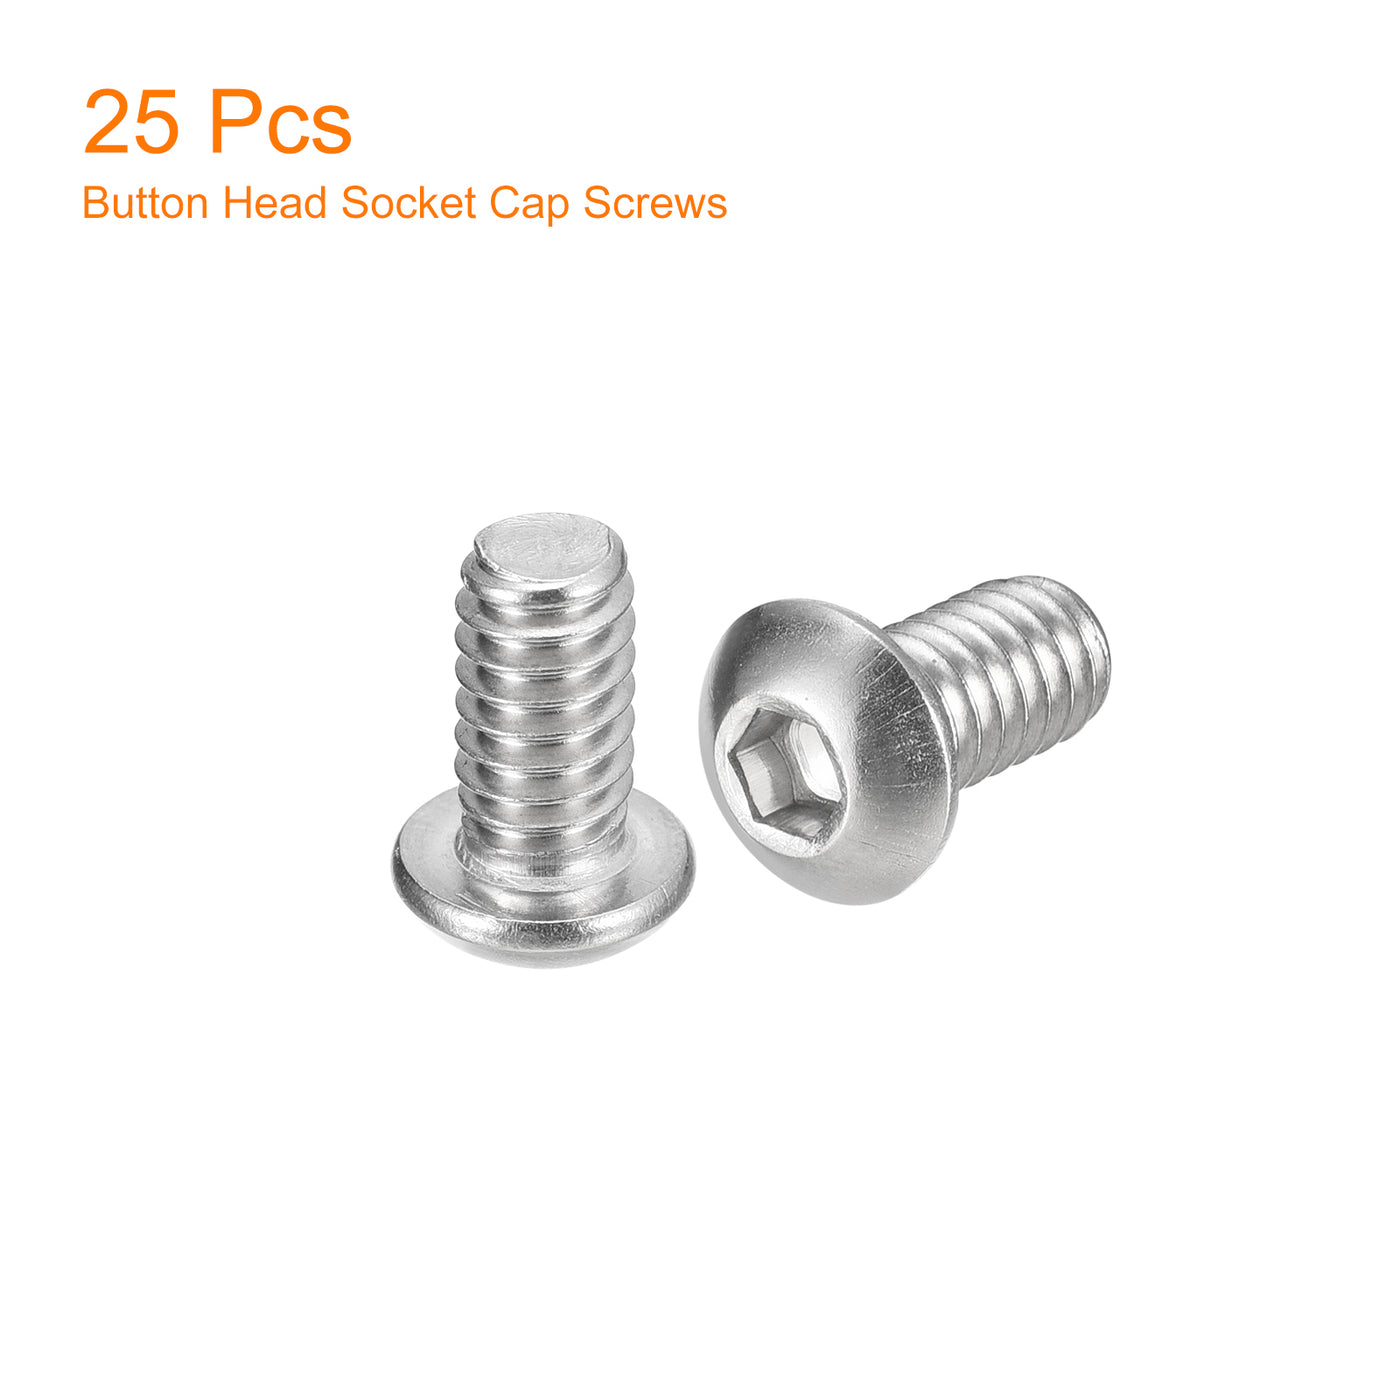 uxcell Uxcell 1/4-20x1/2" Button Head Socket Cap Screws, 25pcs 304 Stainless Steel Screws